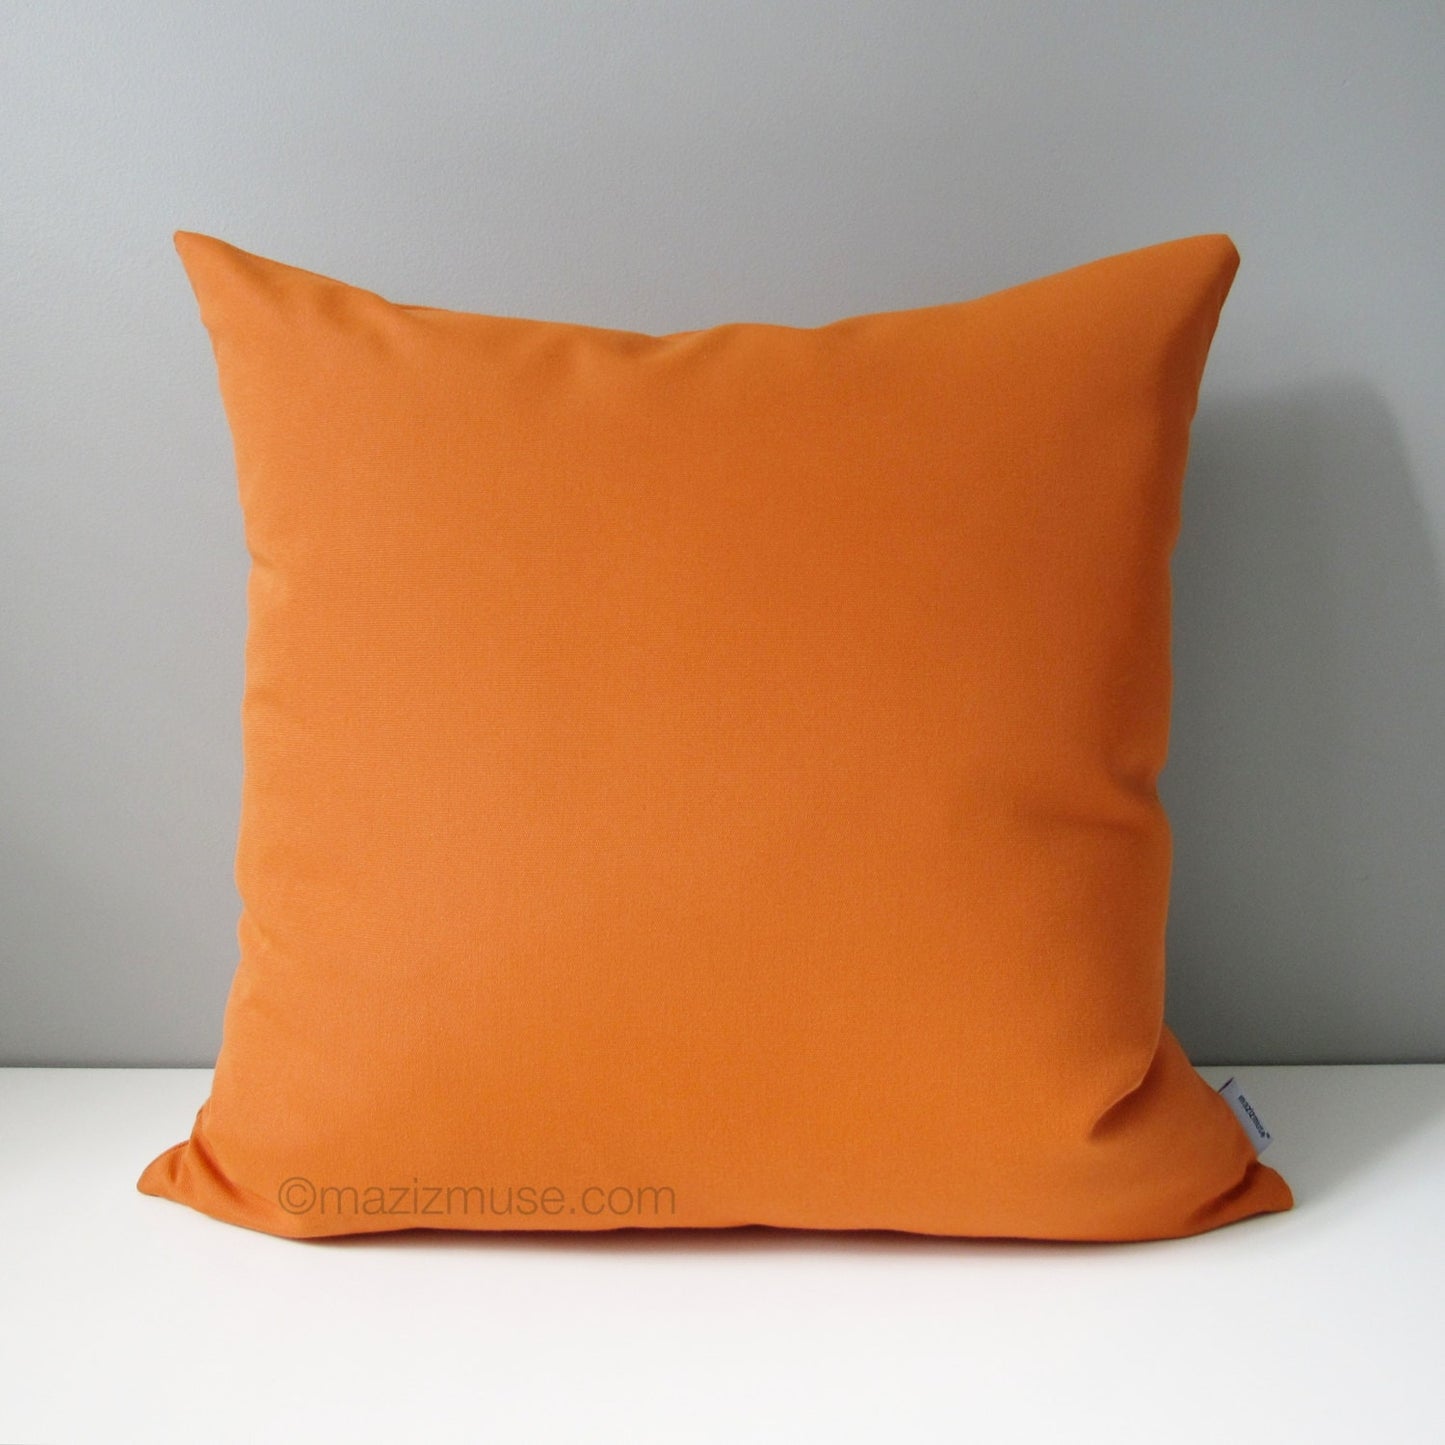 Tuscan Orange Sunbrella Outdoor Cushion Cover, Decorative Cushion Cover